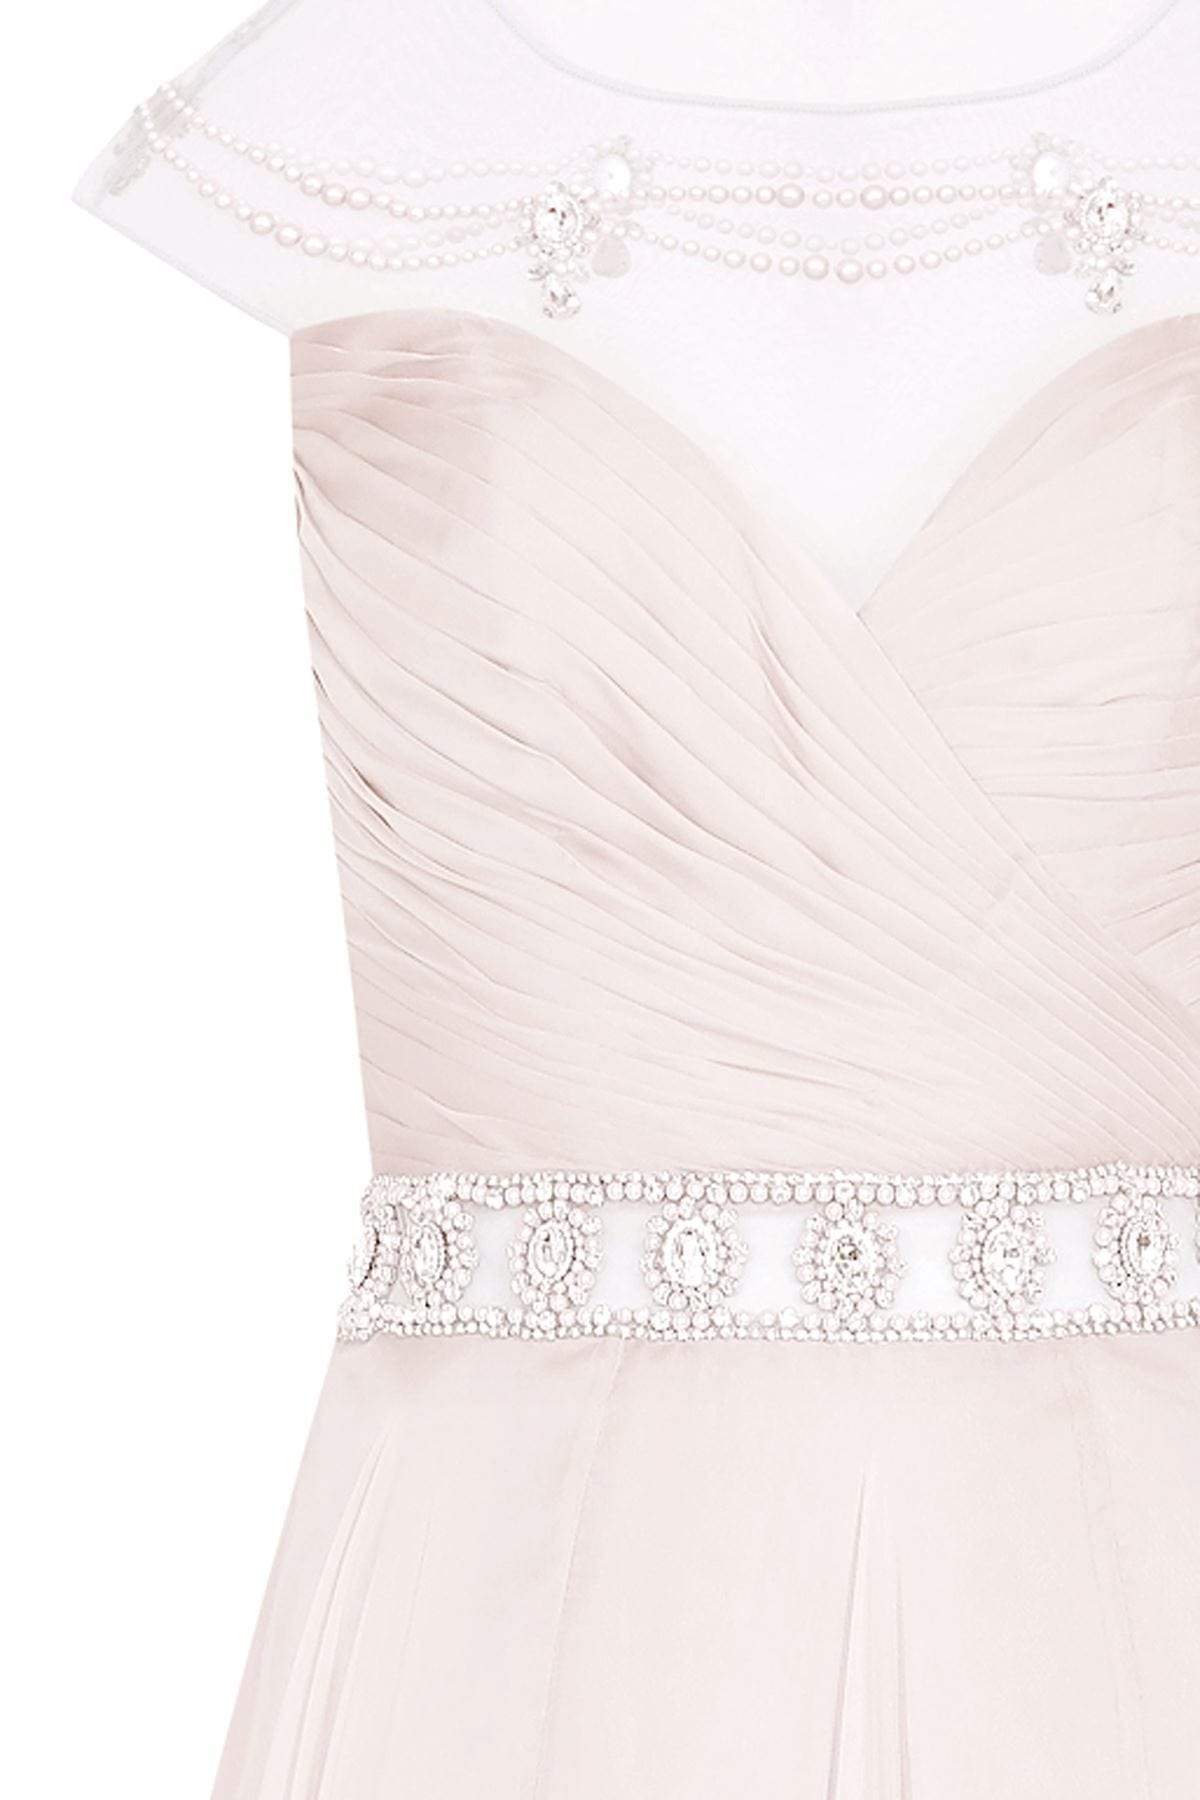 Tarik Ediz - Bejeweled A-line Gown 50091 Special Occasion Dress 0 / Light Pink